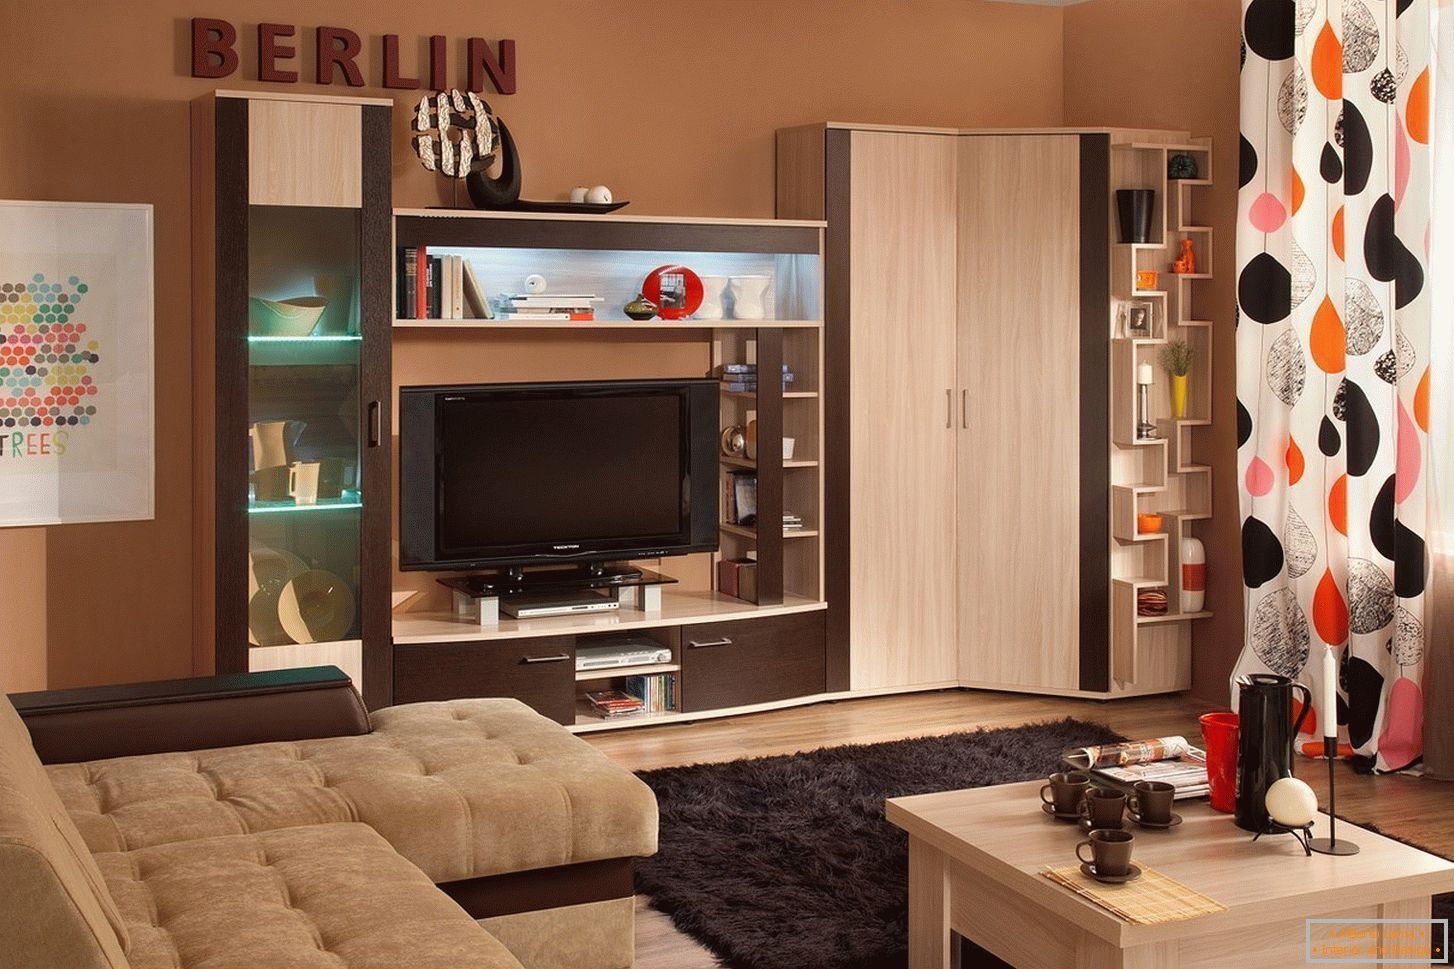 Modular furniture in an apartment of 36 sq m